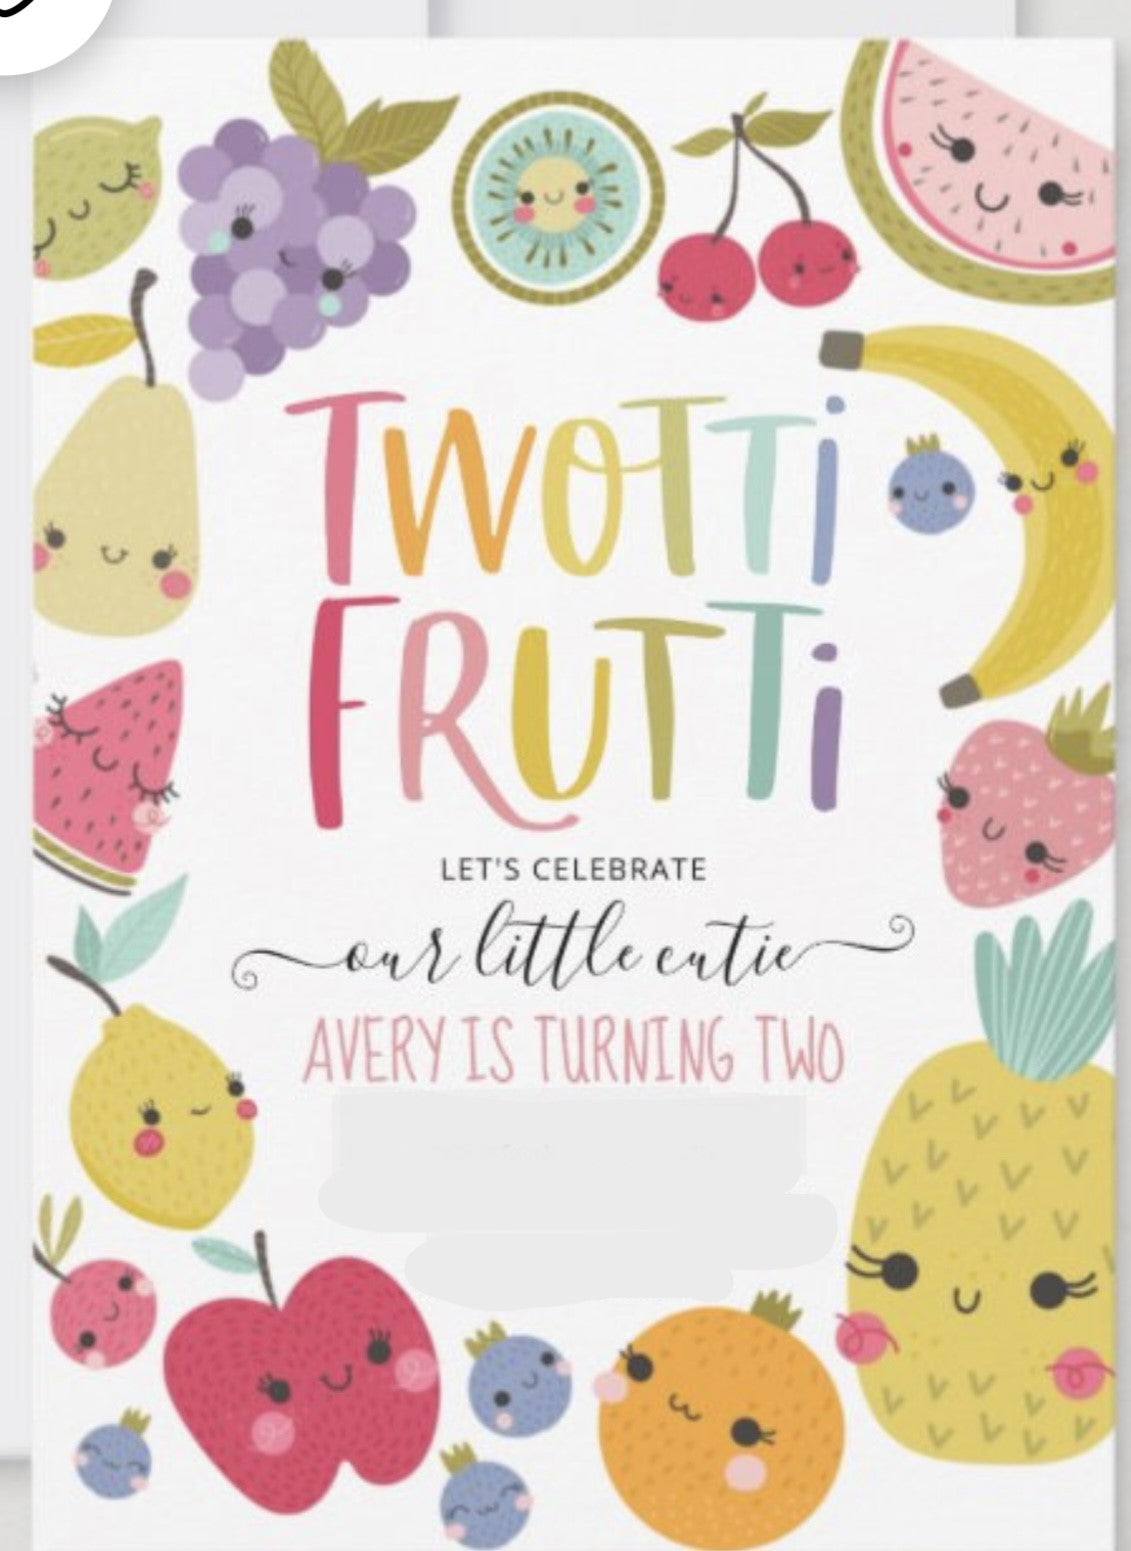 Twotti Frutti 2nd Birthday Cookies